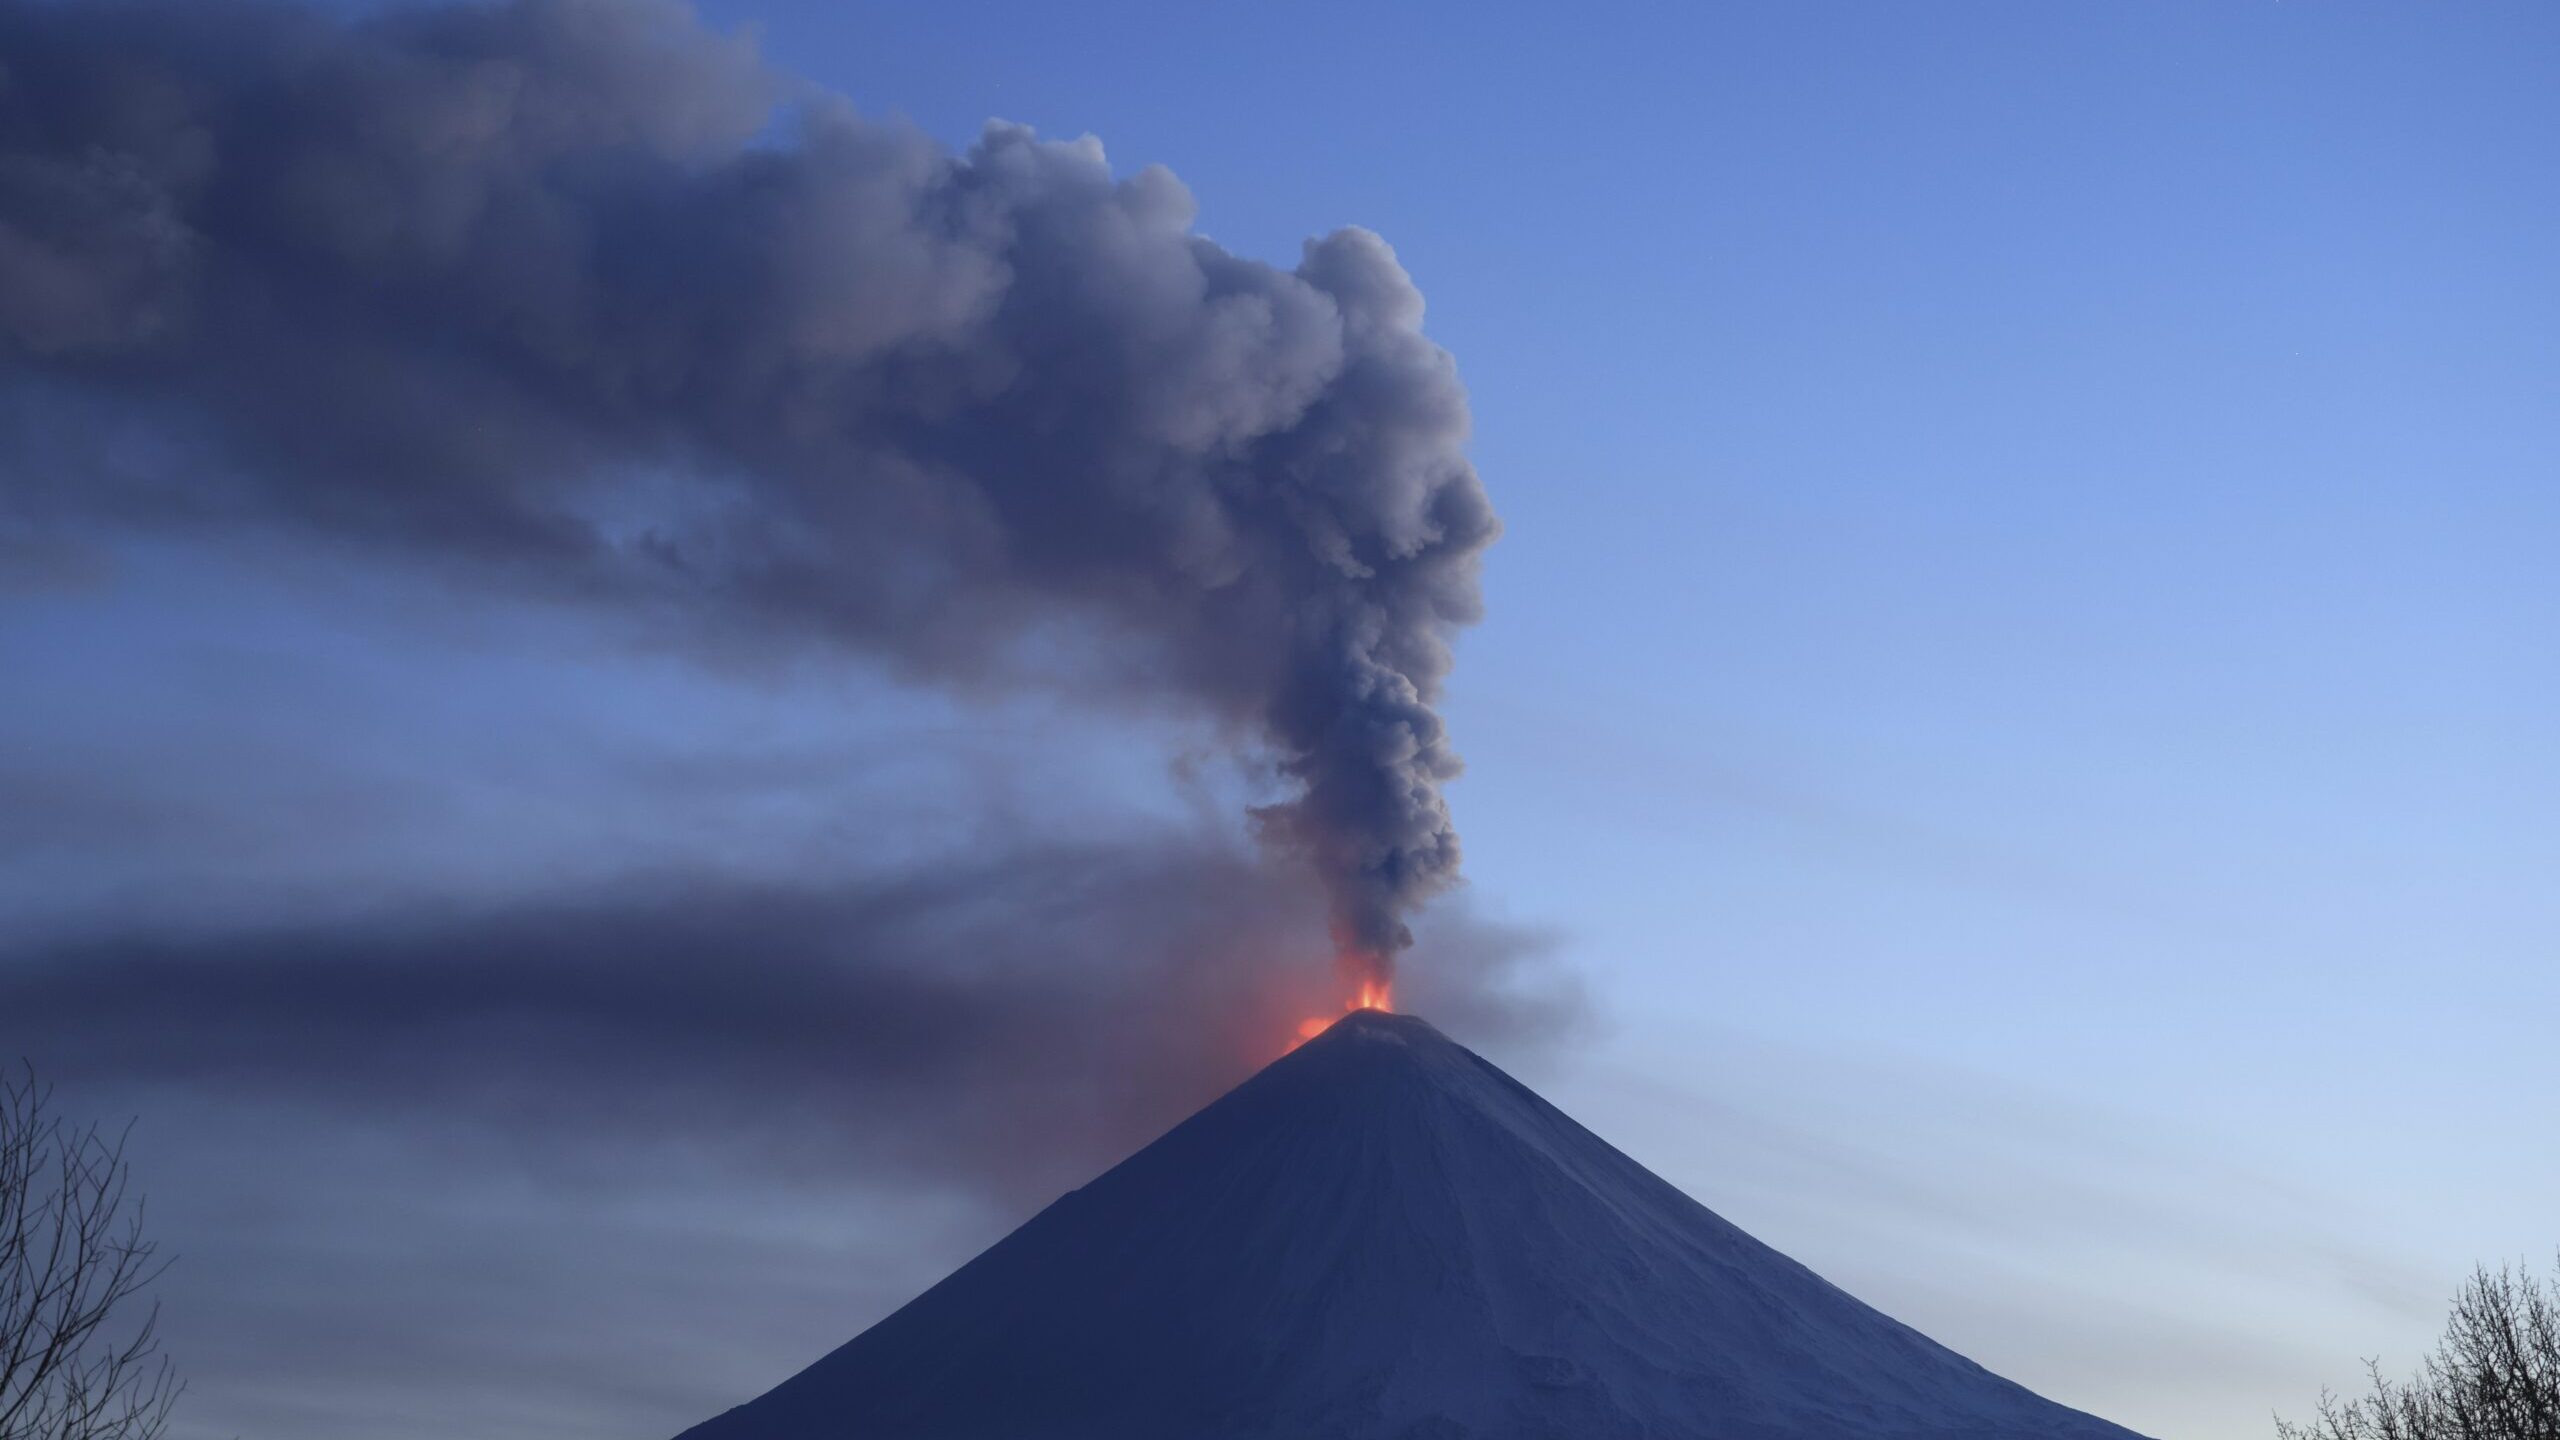 The Klyuchevskoy volcano, one of the highest active volcanoes in the world, erupts in Russia's nort...